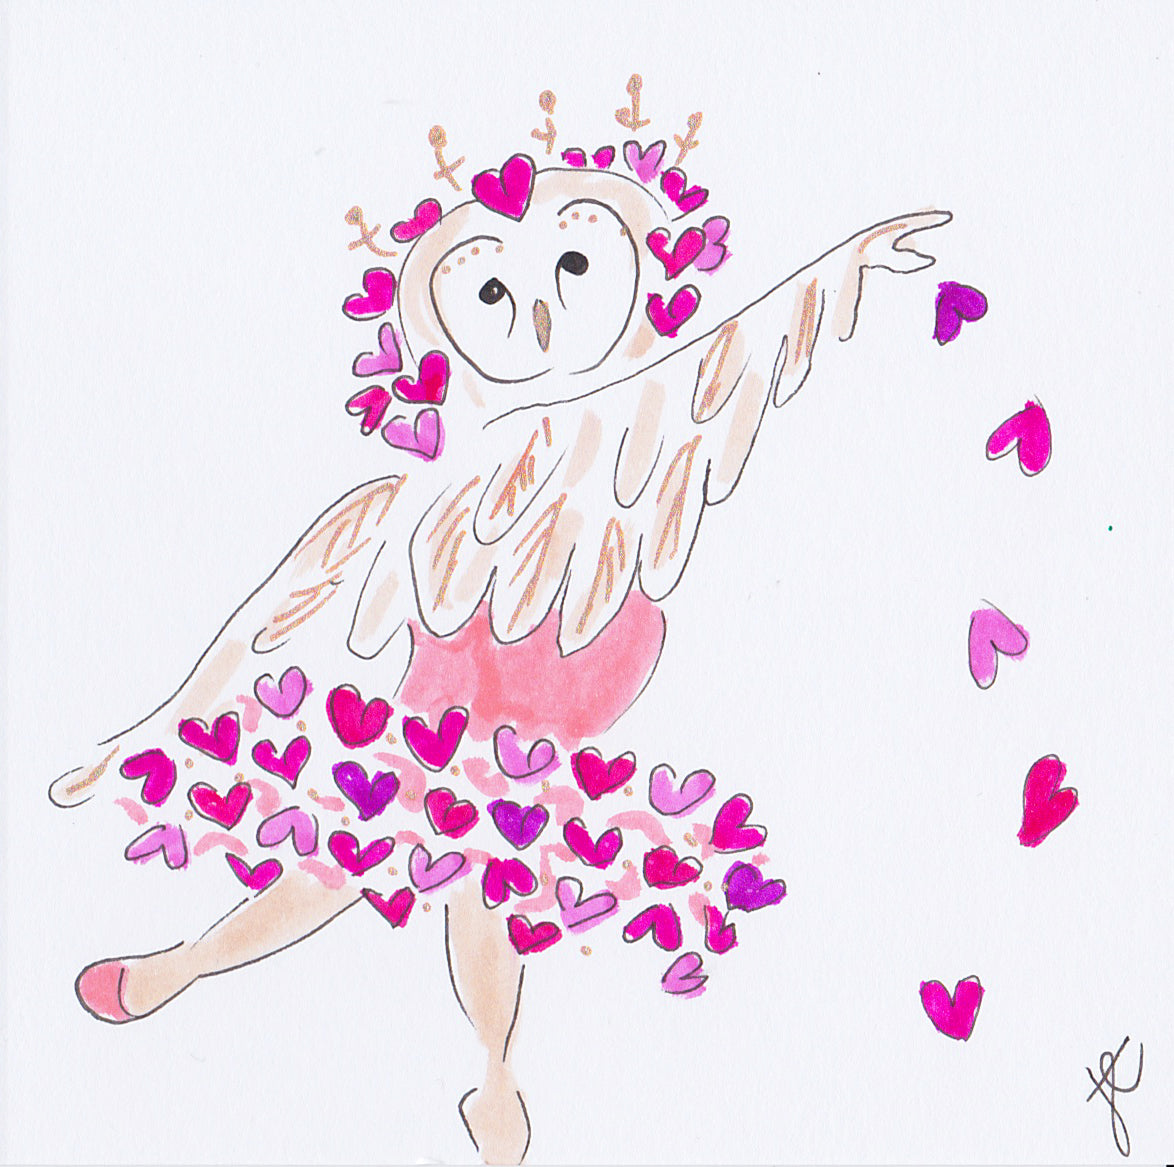 Barbara Barn Owl Ballettoons illustration with hearts tutu skirt and headdress